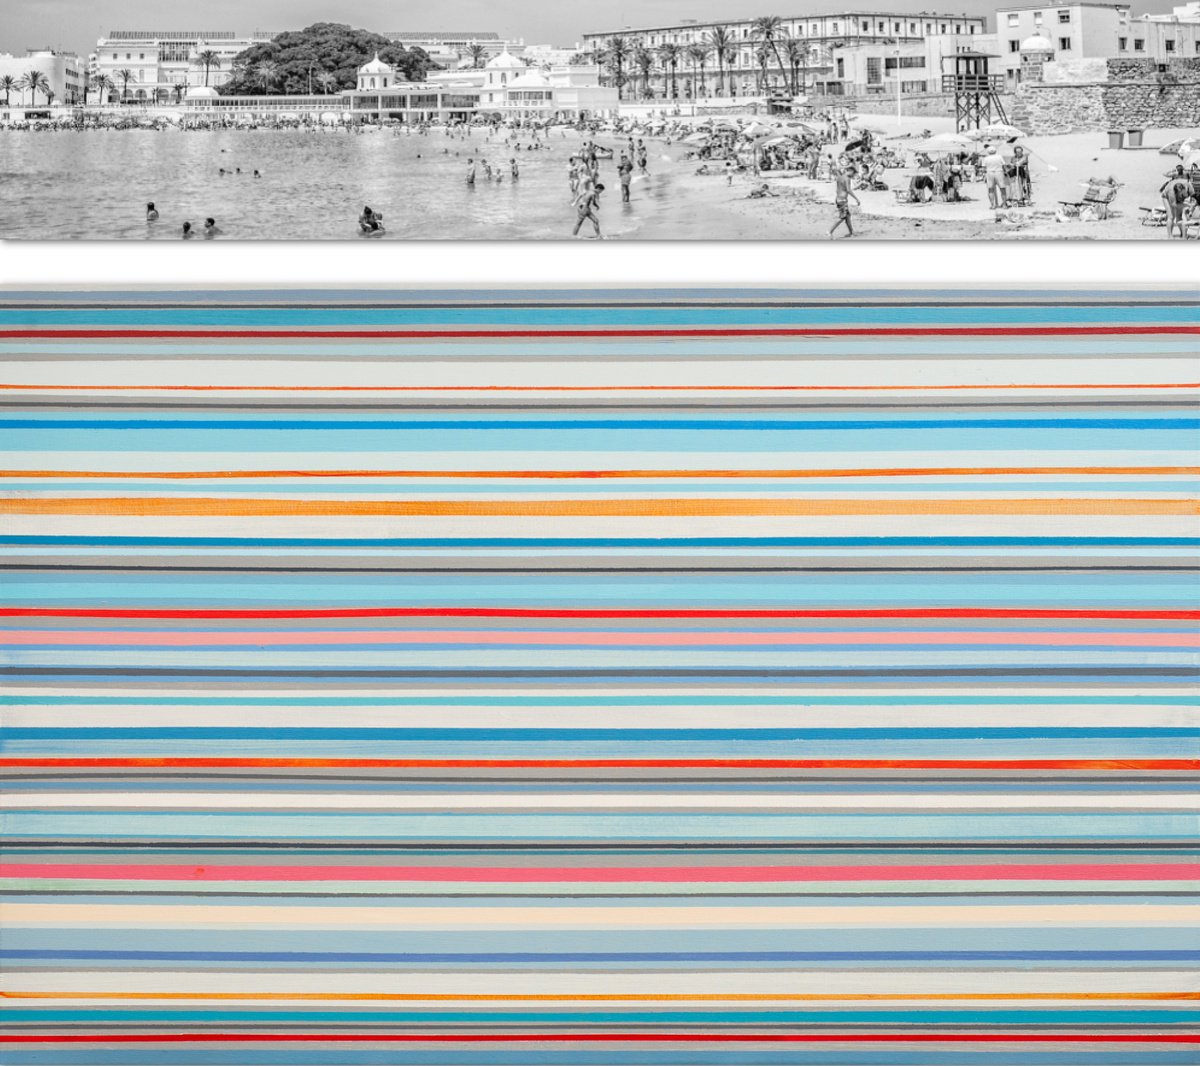 Emotional landscape 18 (beach) by Susana Sancho Beltr�n